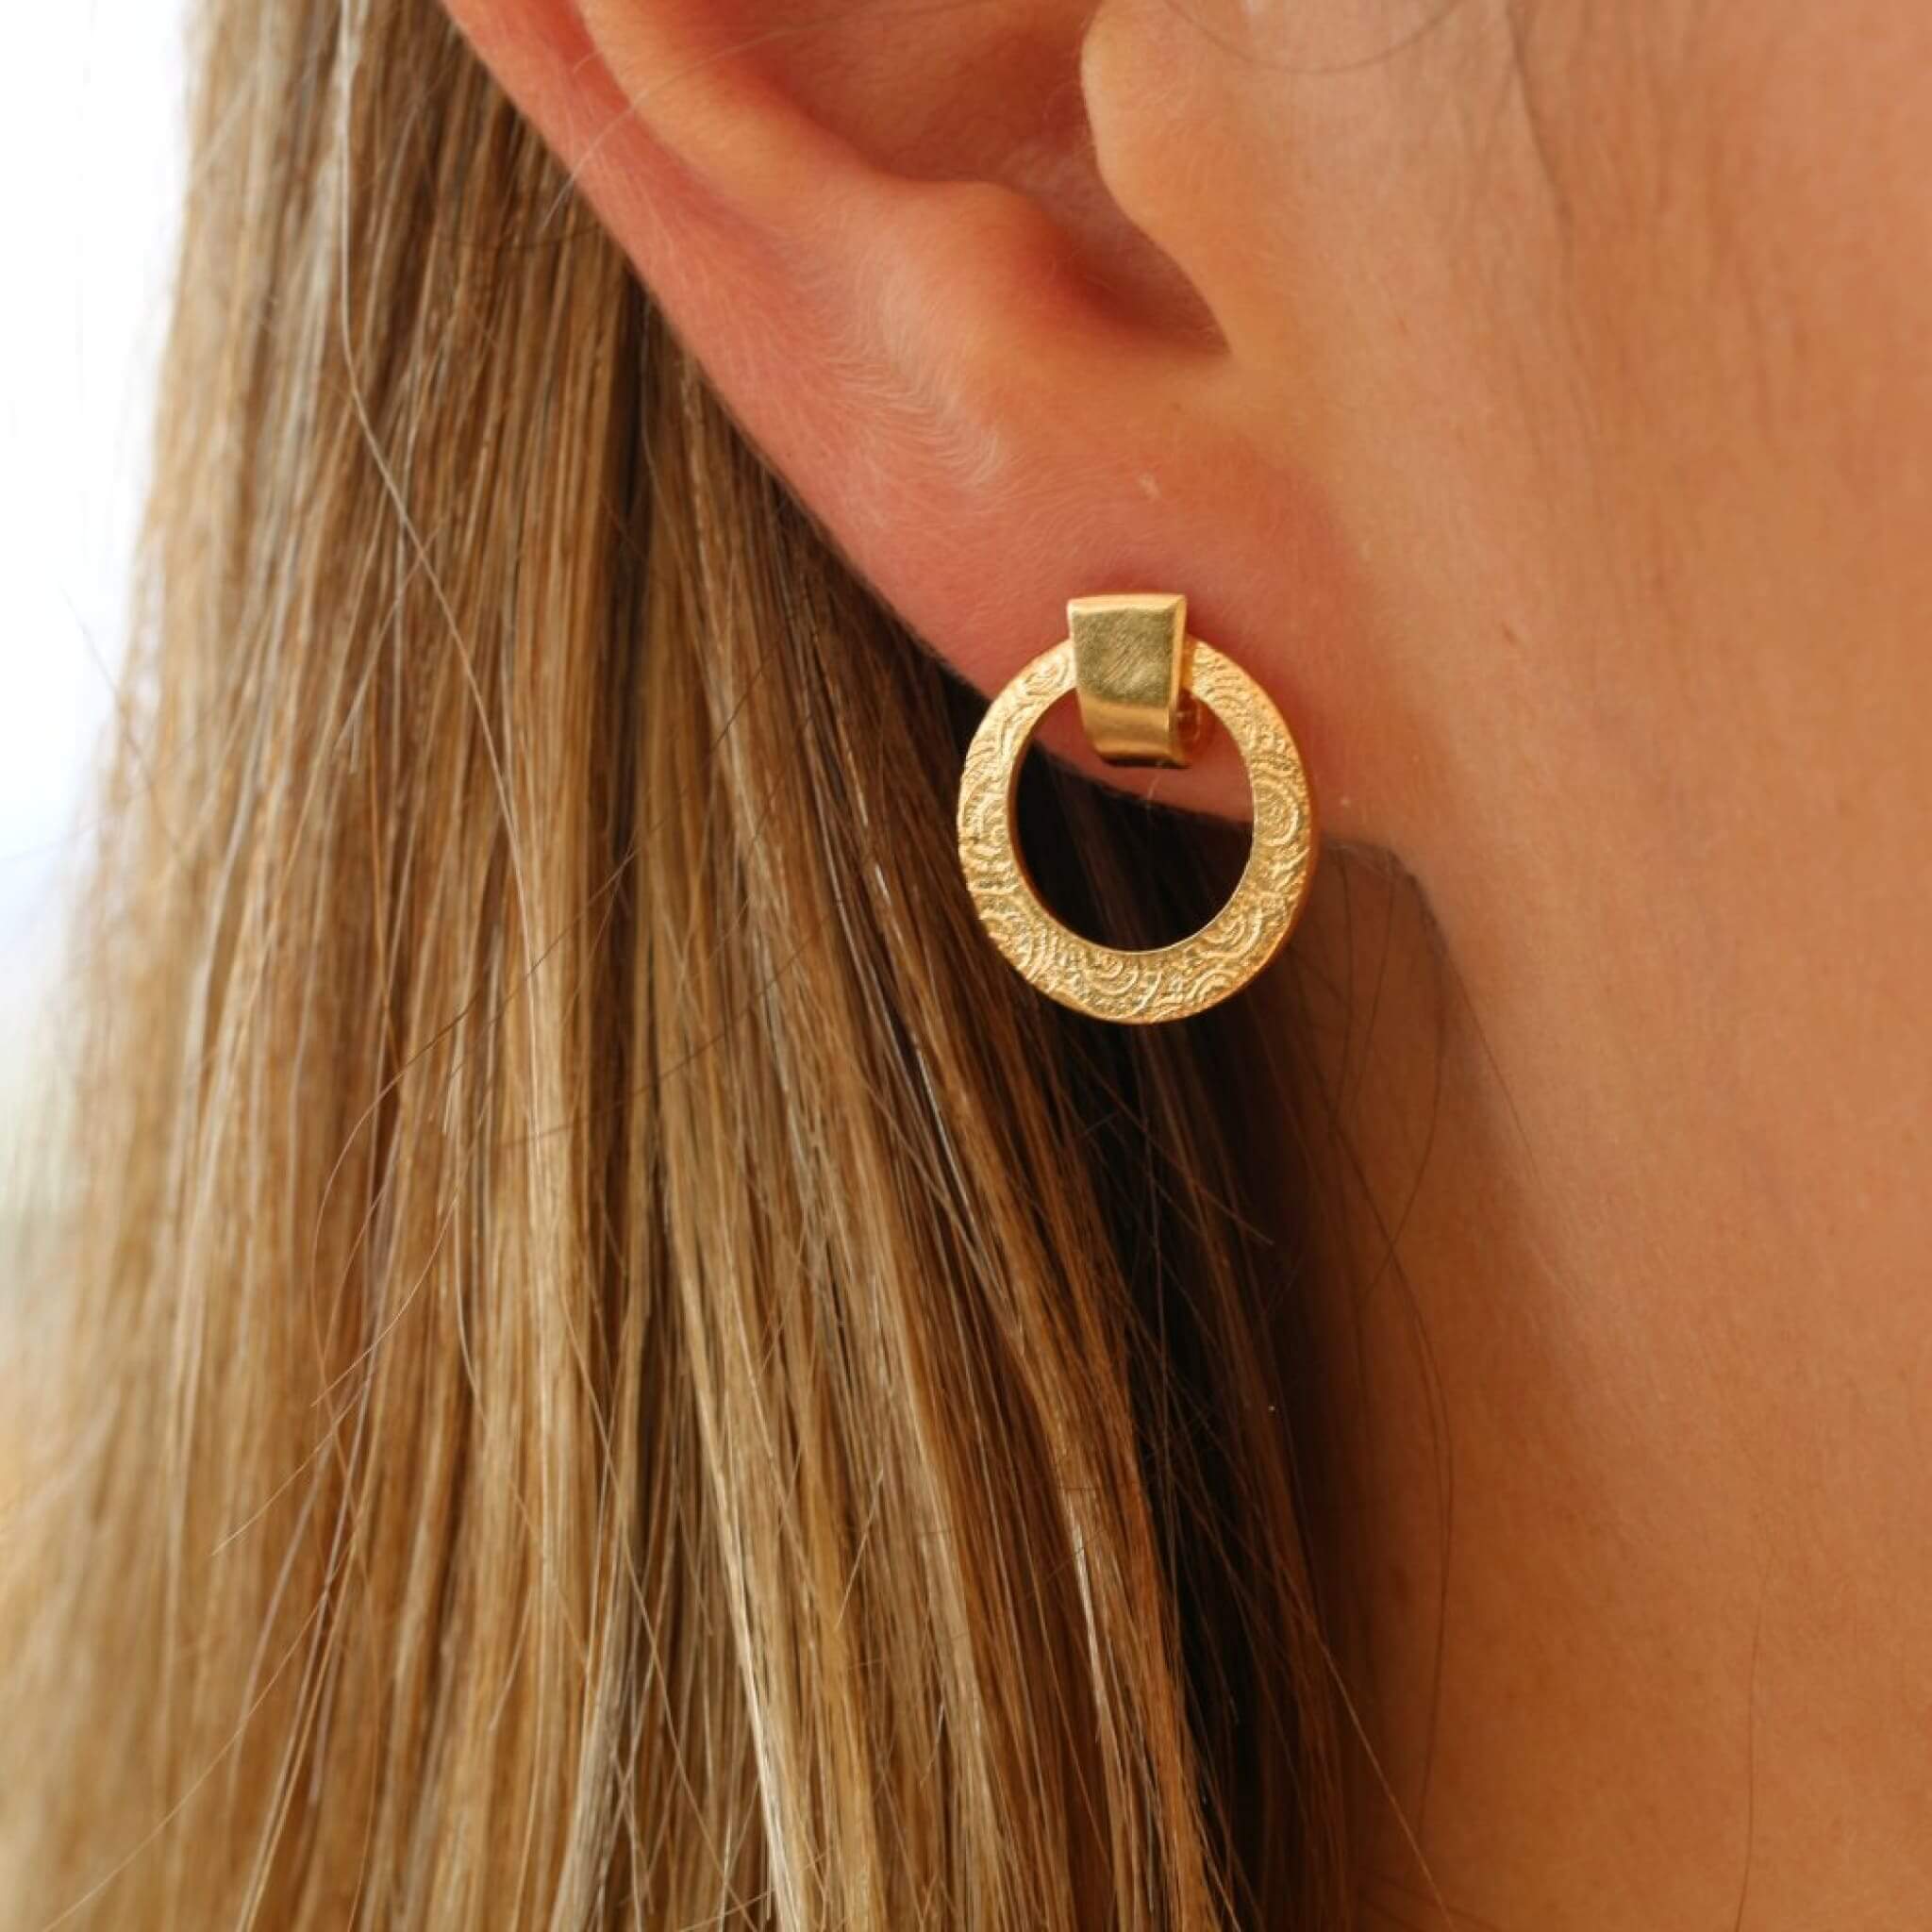 14K Gold Filled Circular Stud Earrings